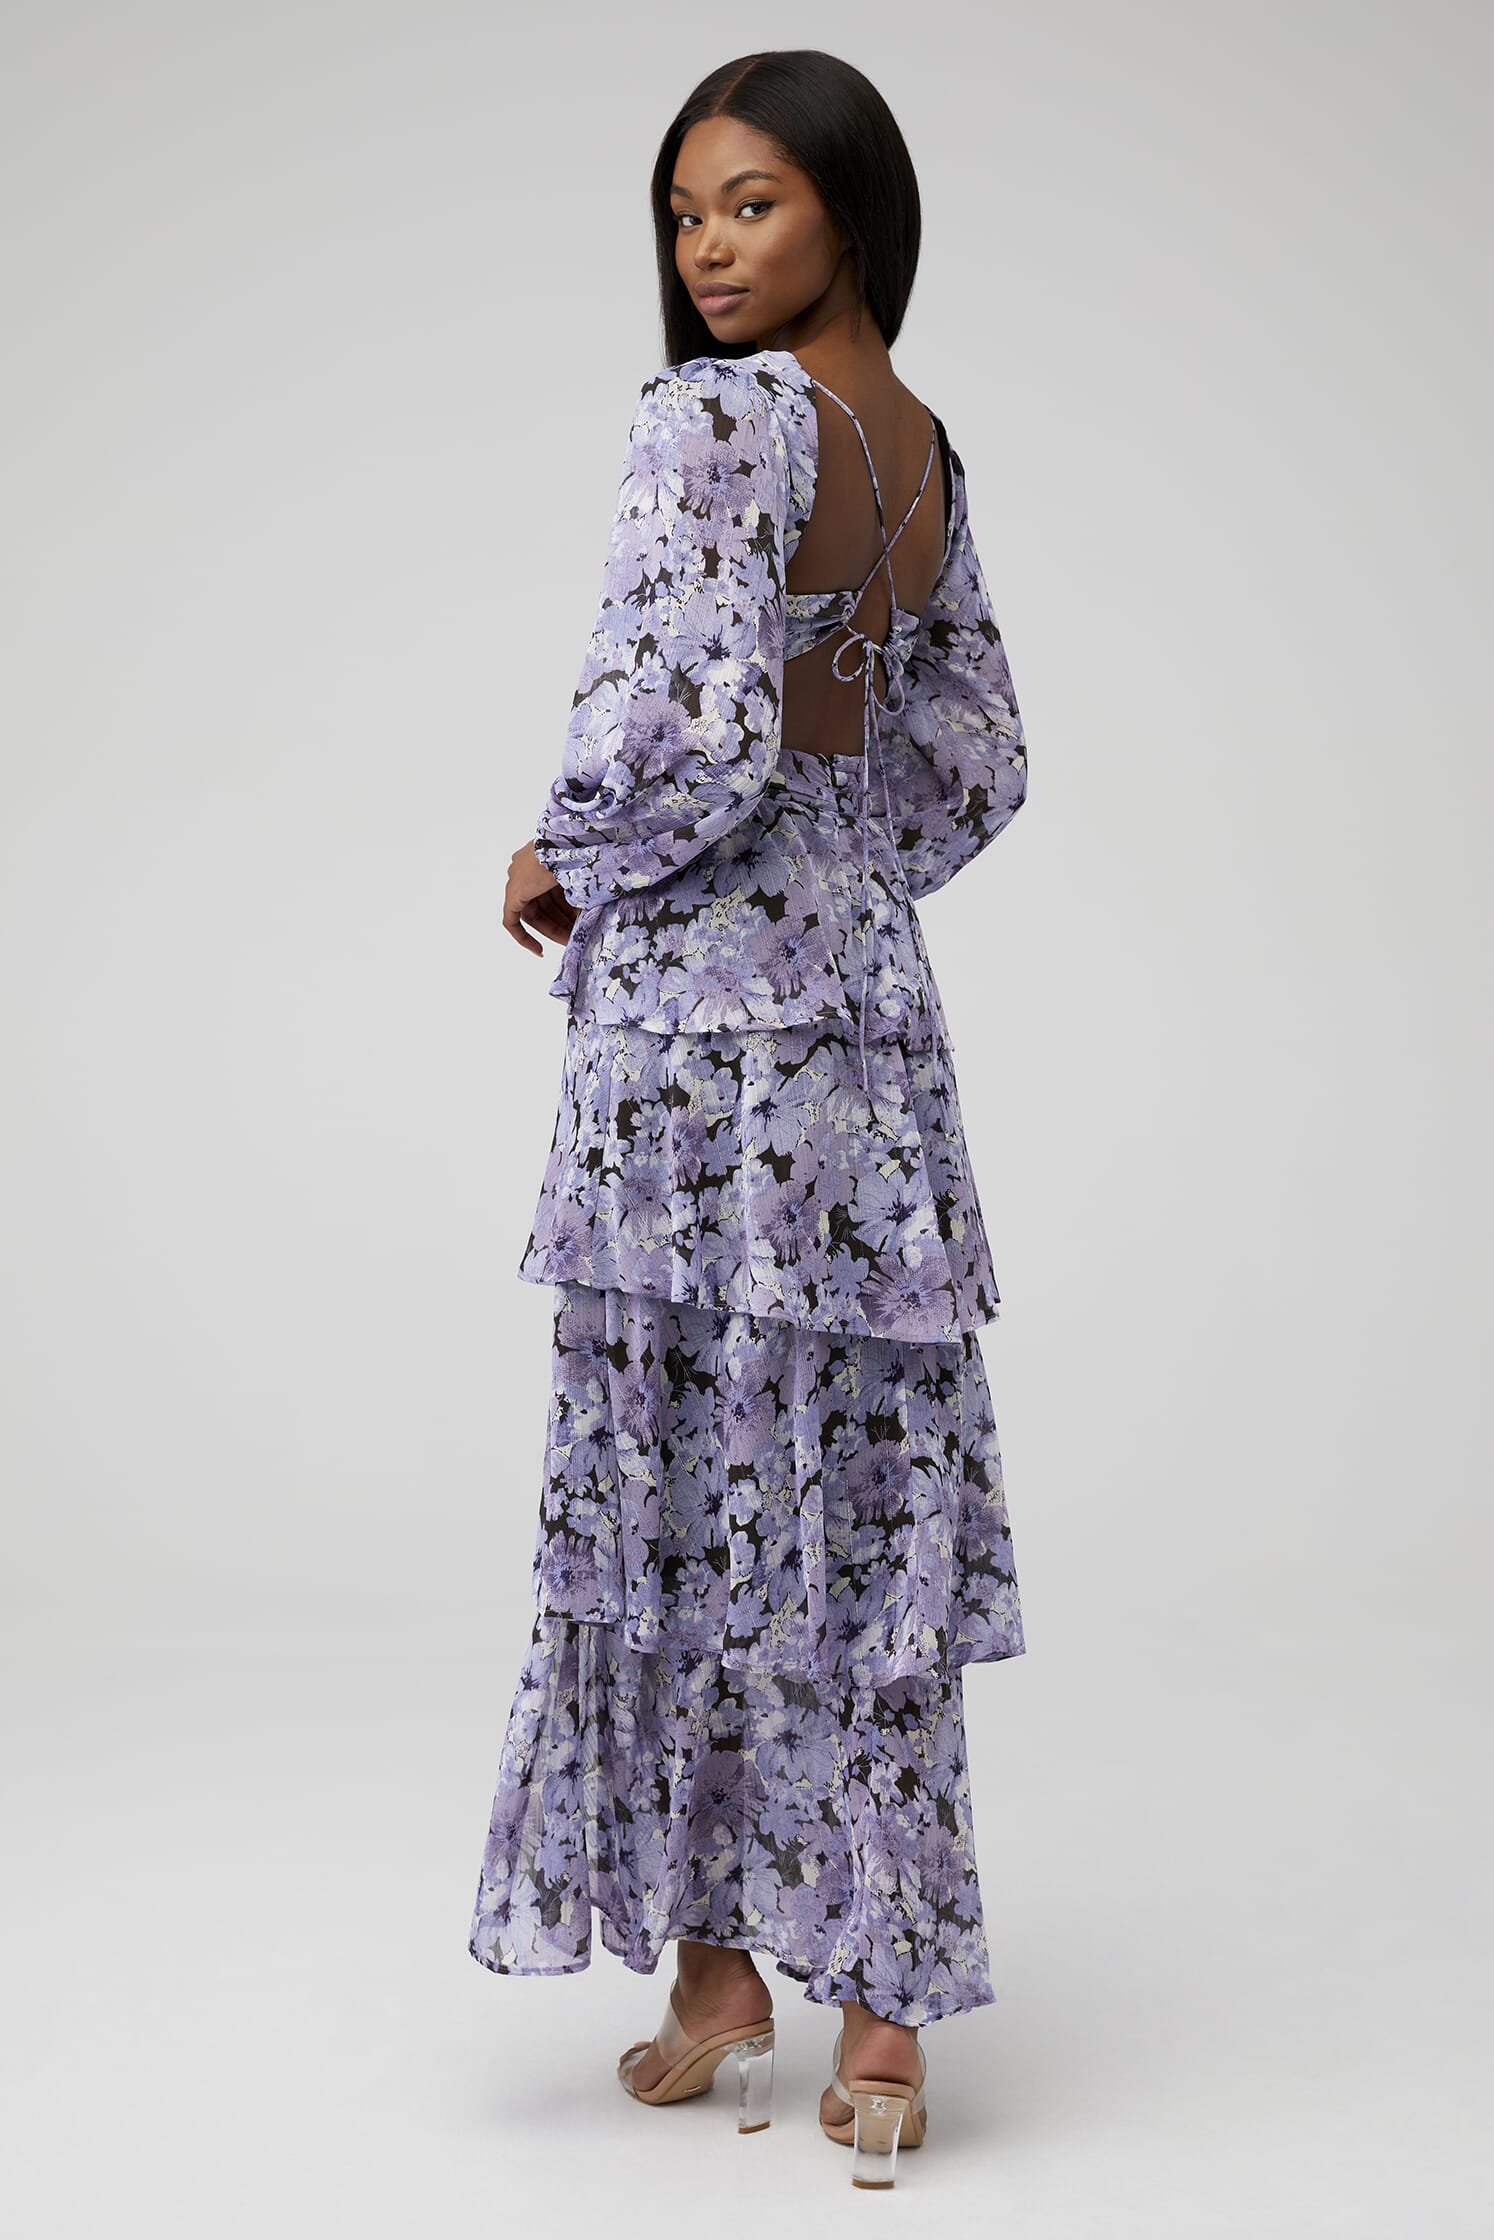 ASTR | Anora Dress in Black Purple Floral| FashionPass